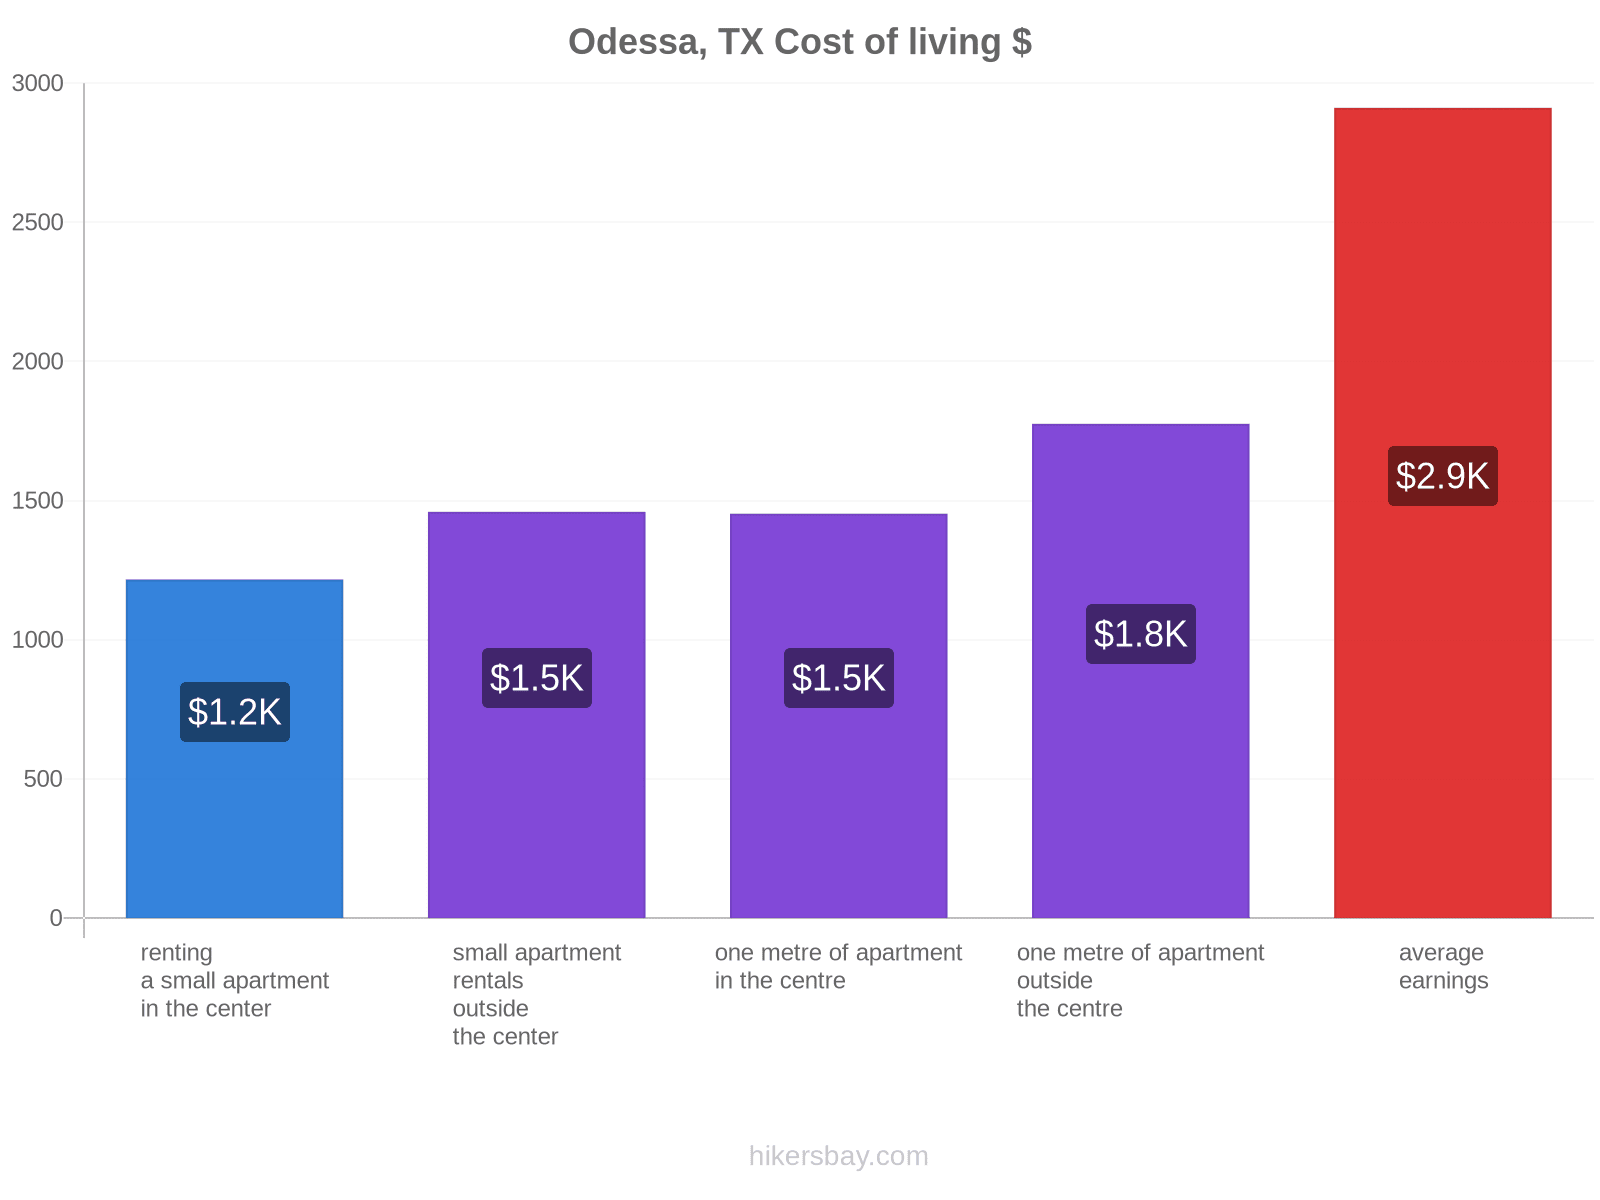 Odessa, TX cost of living hikersbay.com